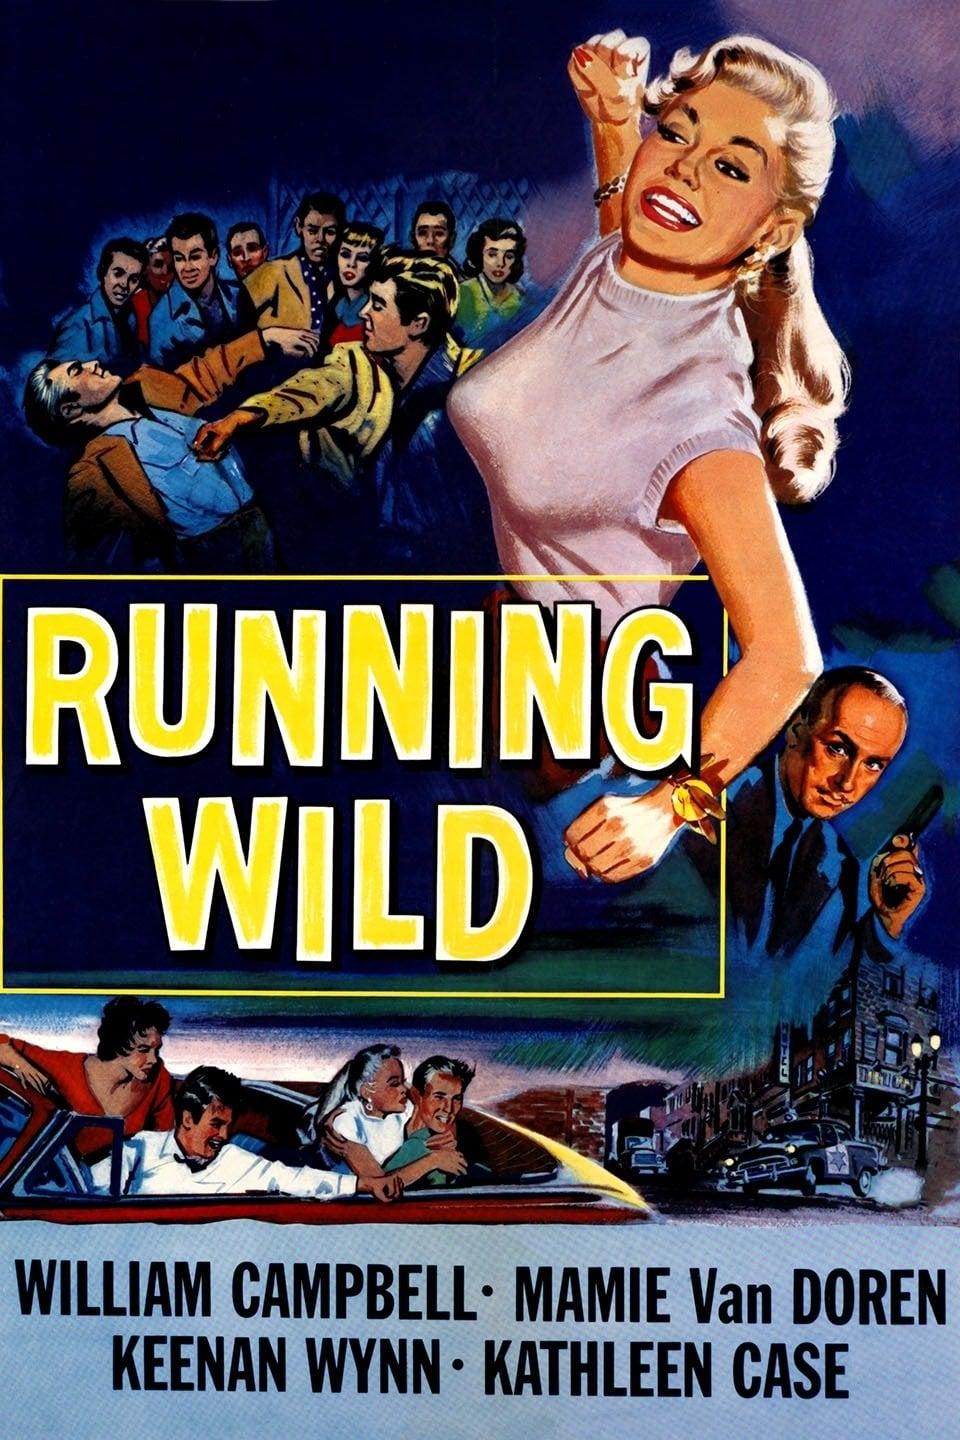 Running Wild poster